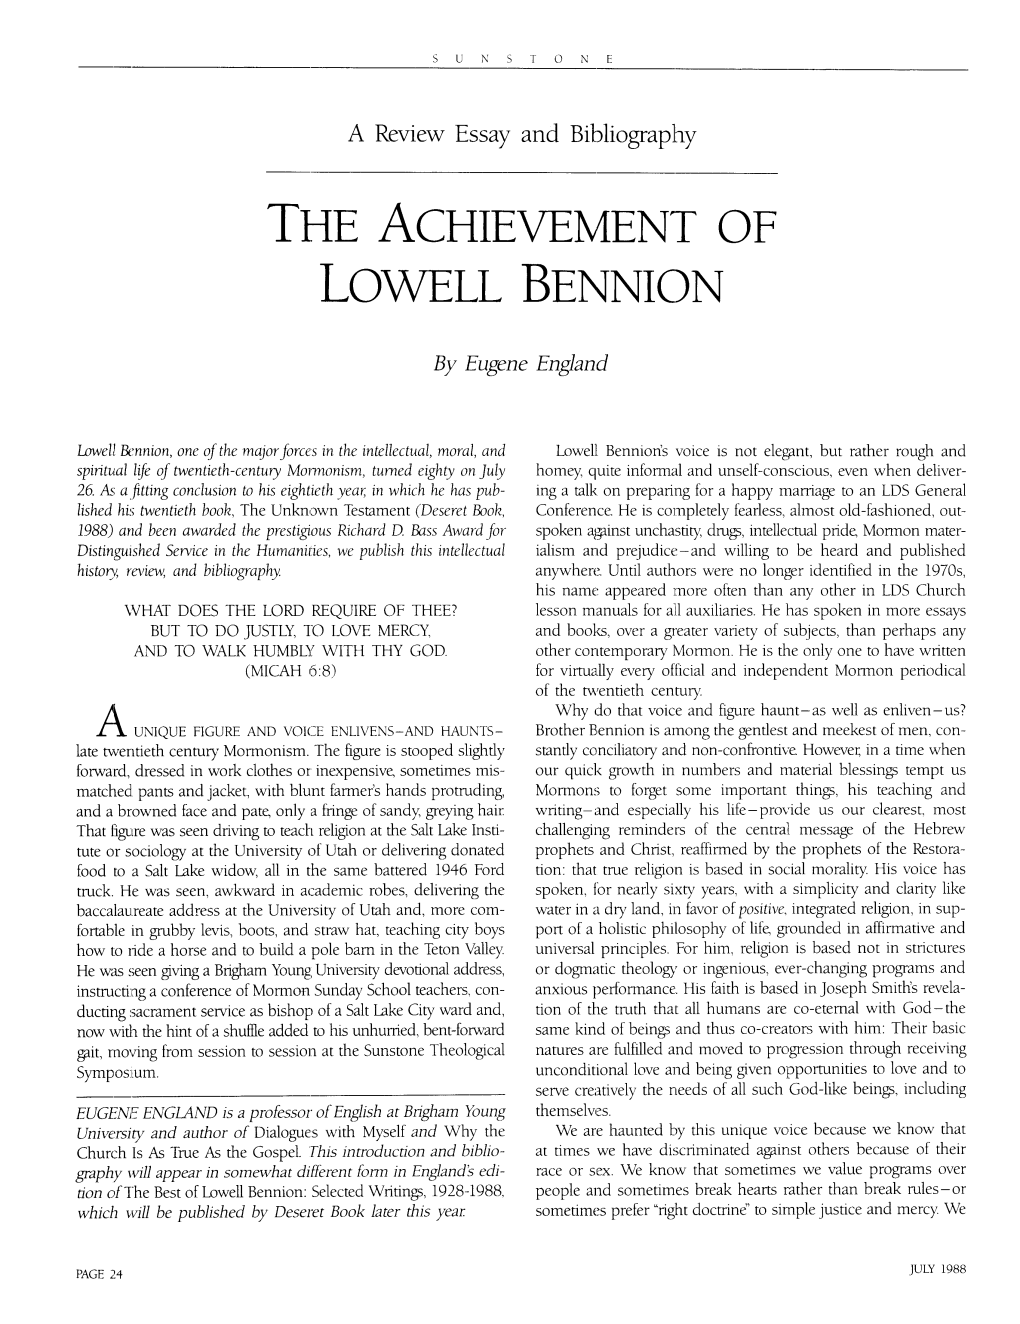 The Achievement of Lowell Bennion